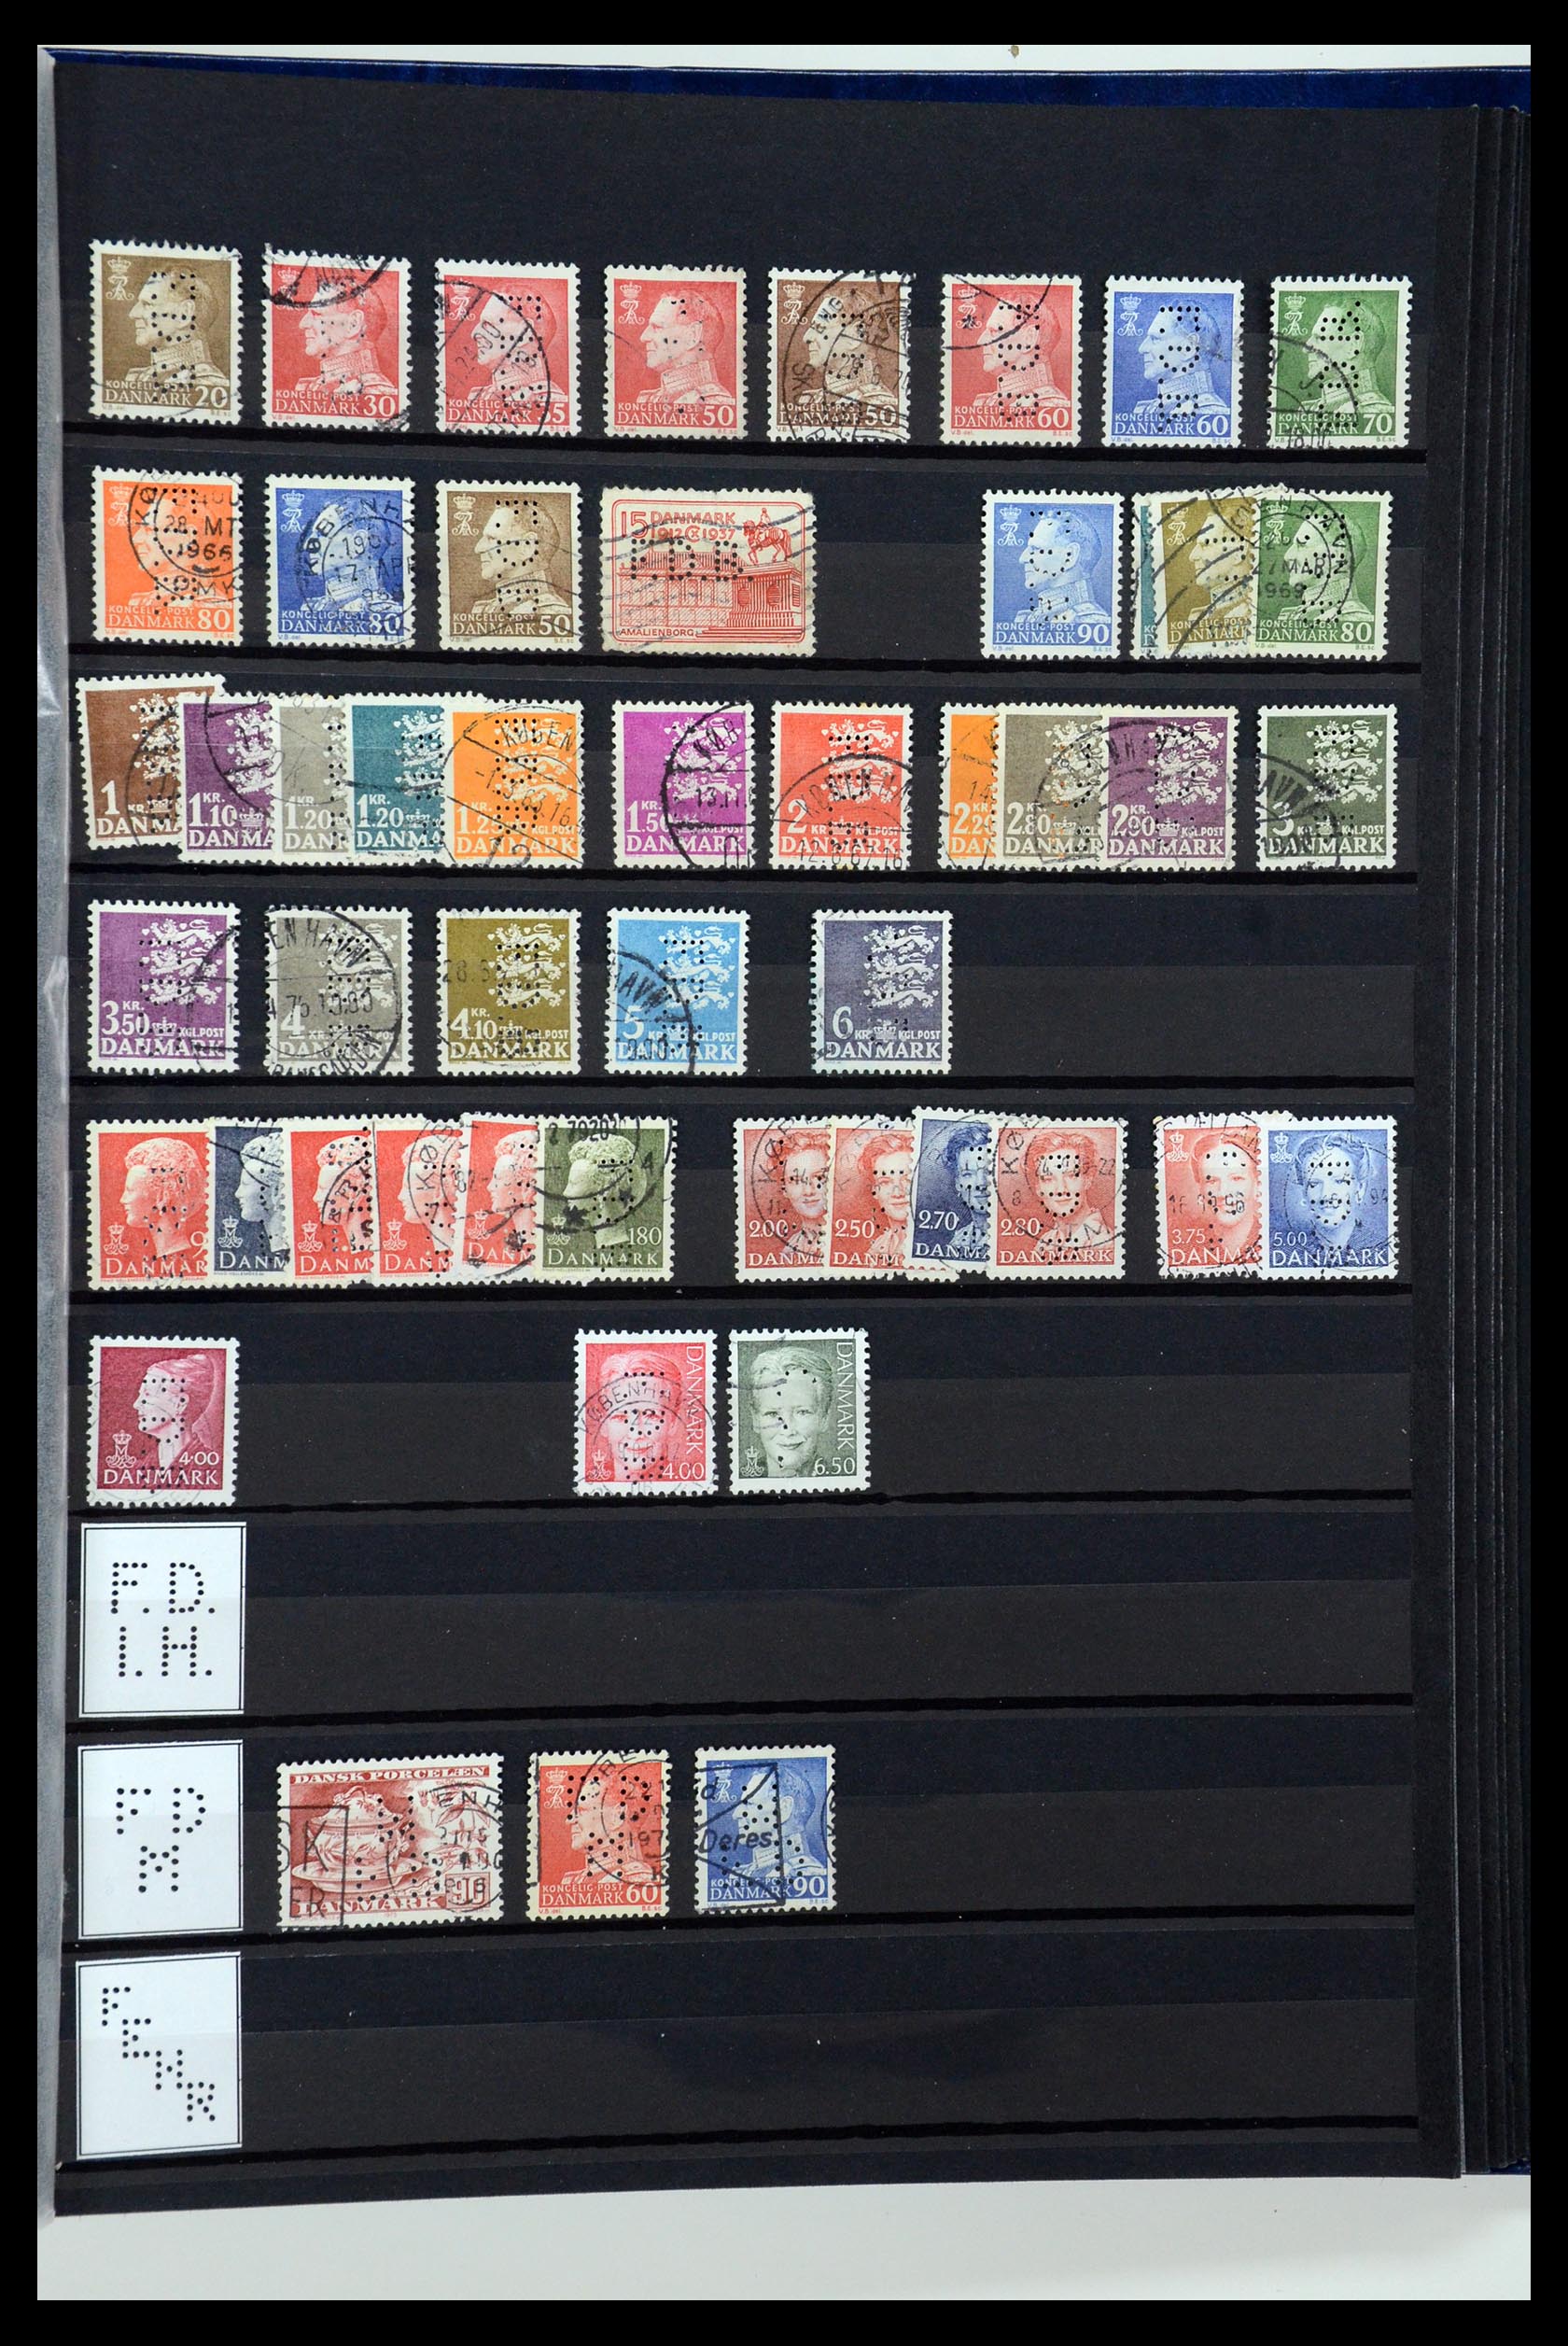 36396 050 - Stamp collection 36396 Denmark perfins.